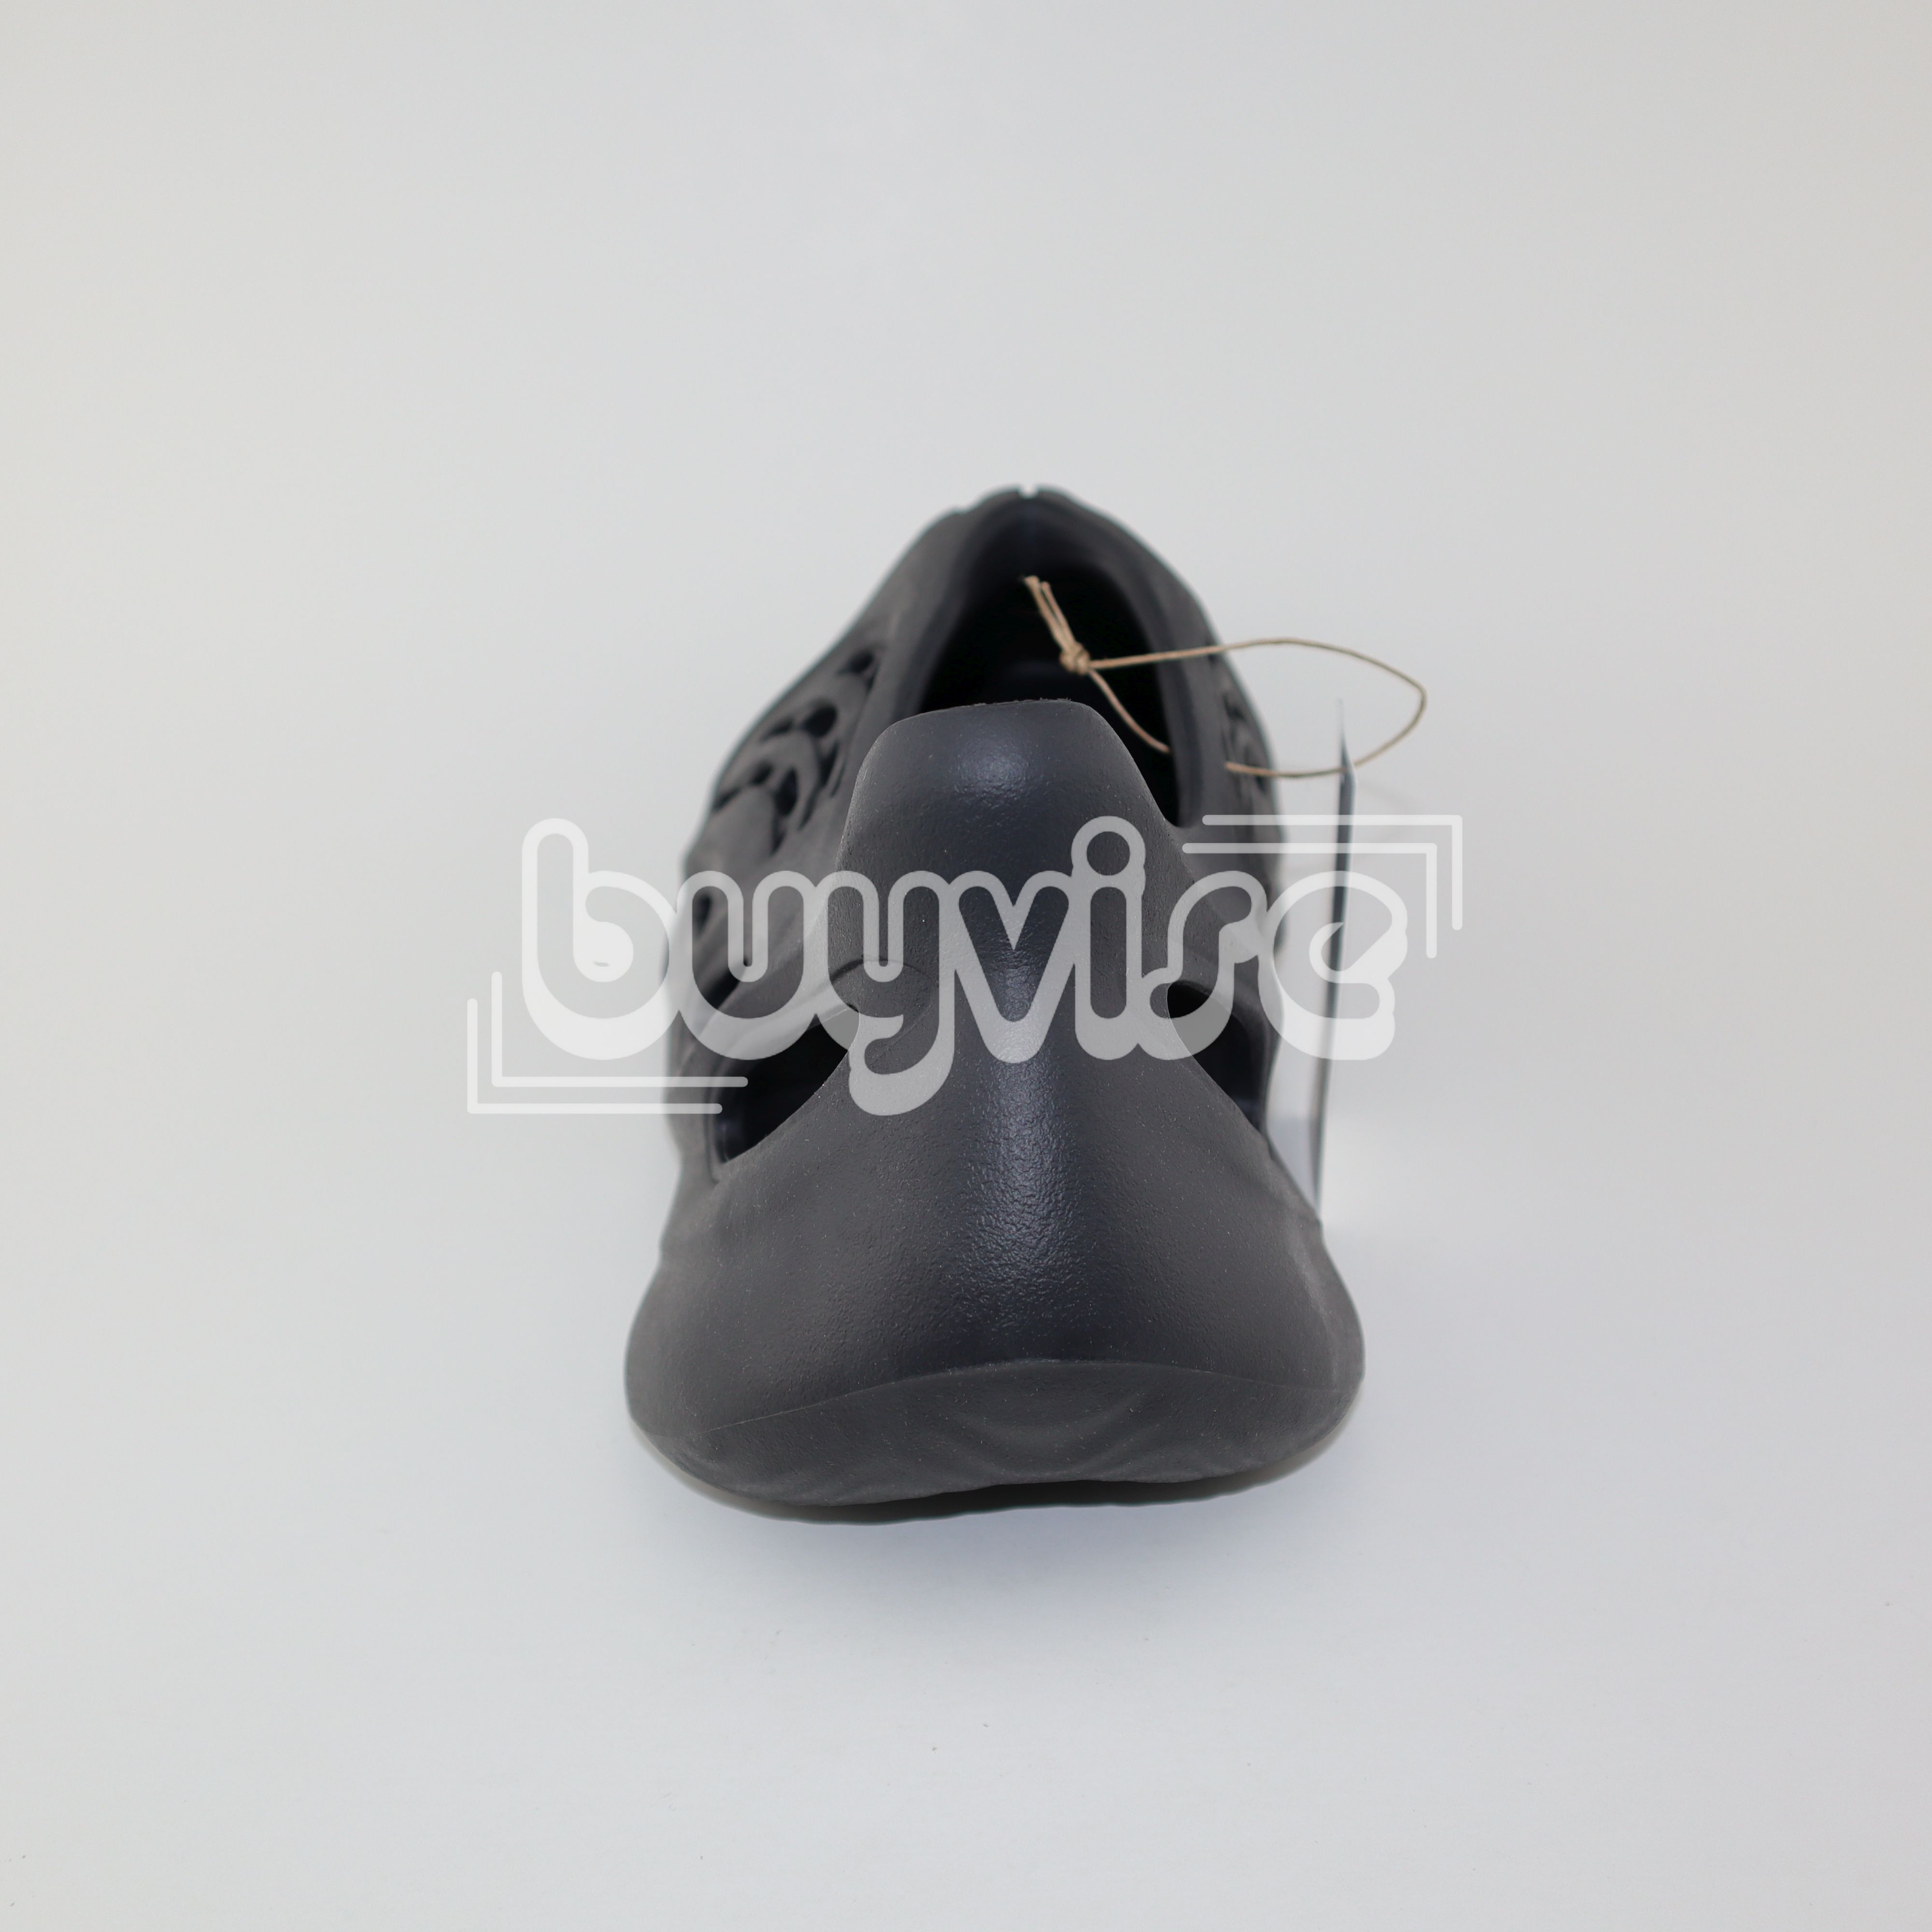 adidas Yeezy Foam Runner Onyx HP8739